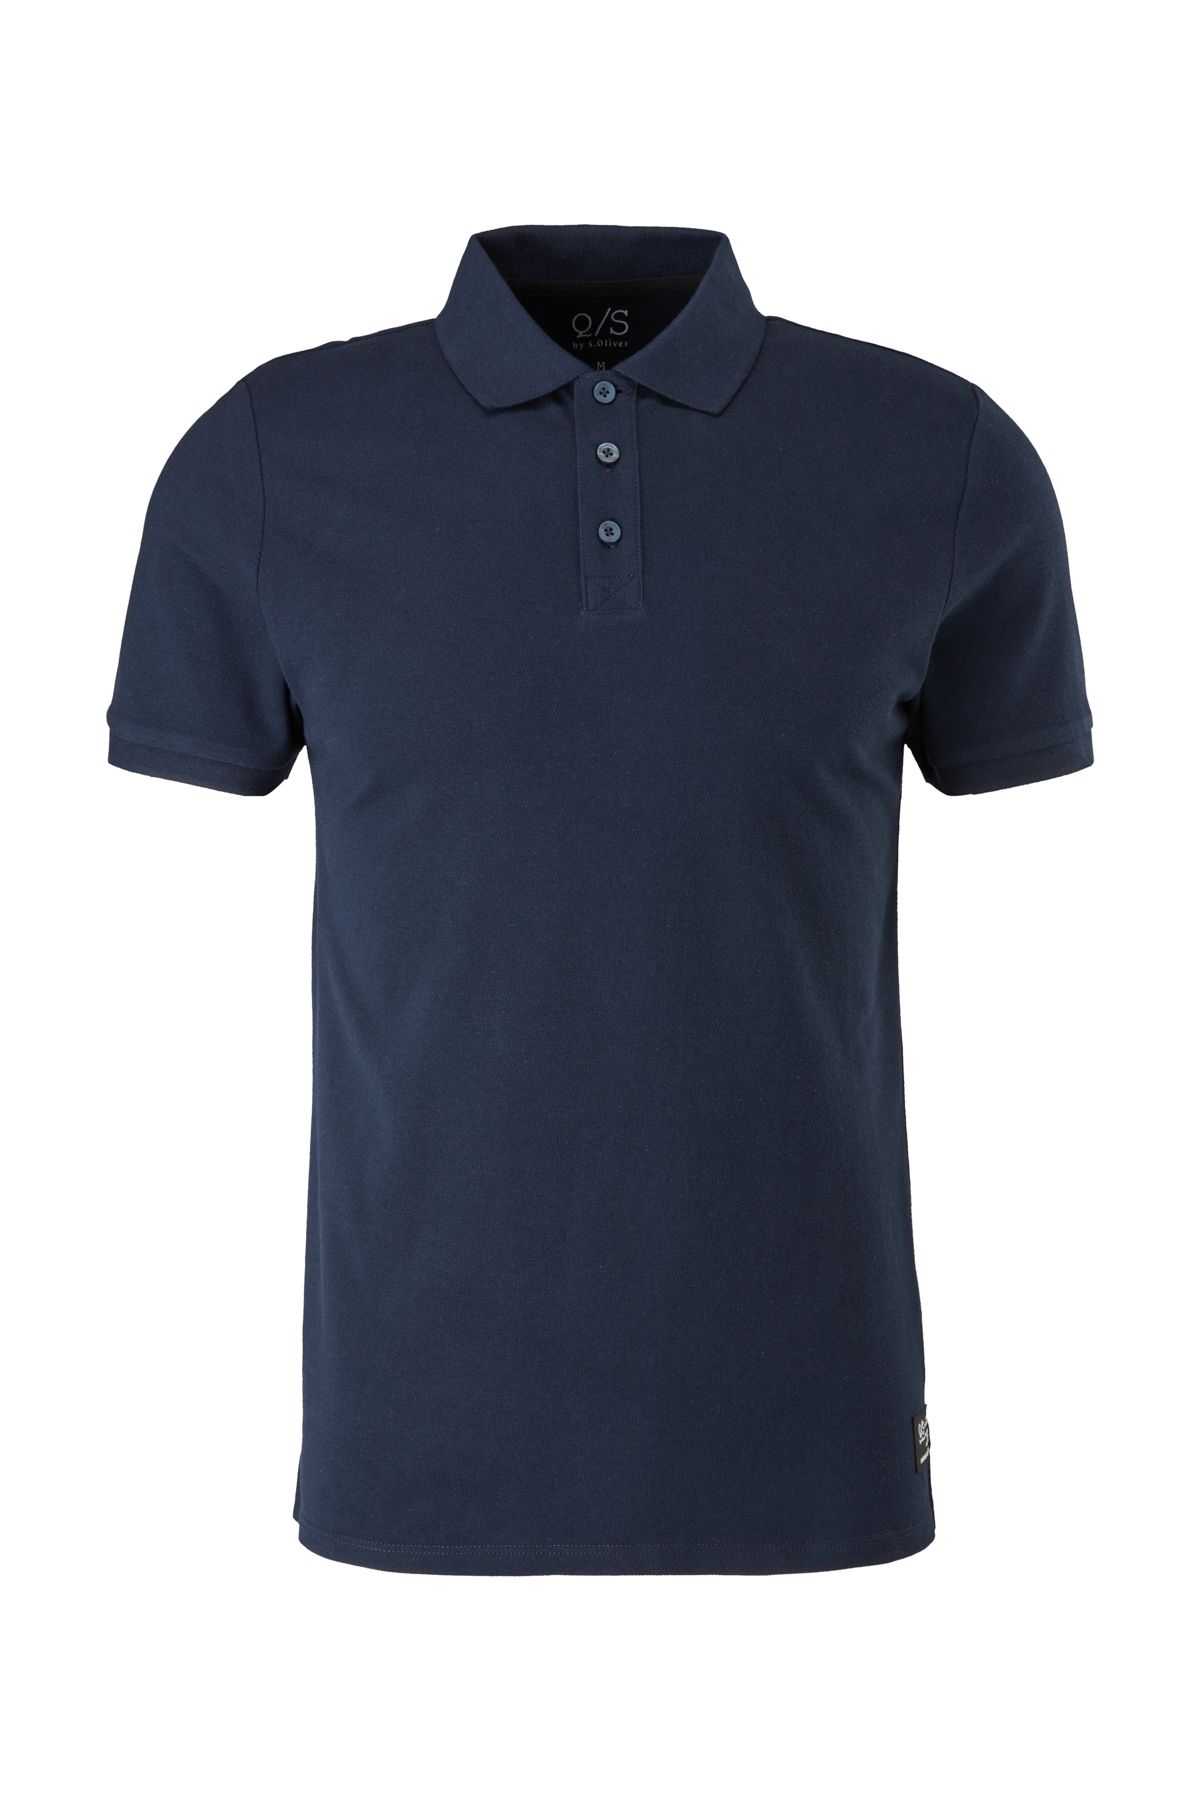 Regular - Trendyol - - Blau Fit by QS Poloshirt s.Oliver